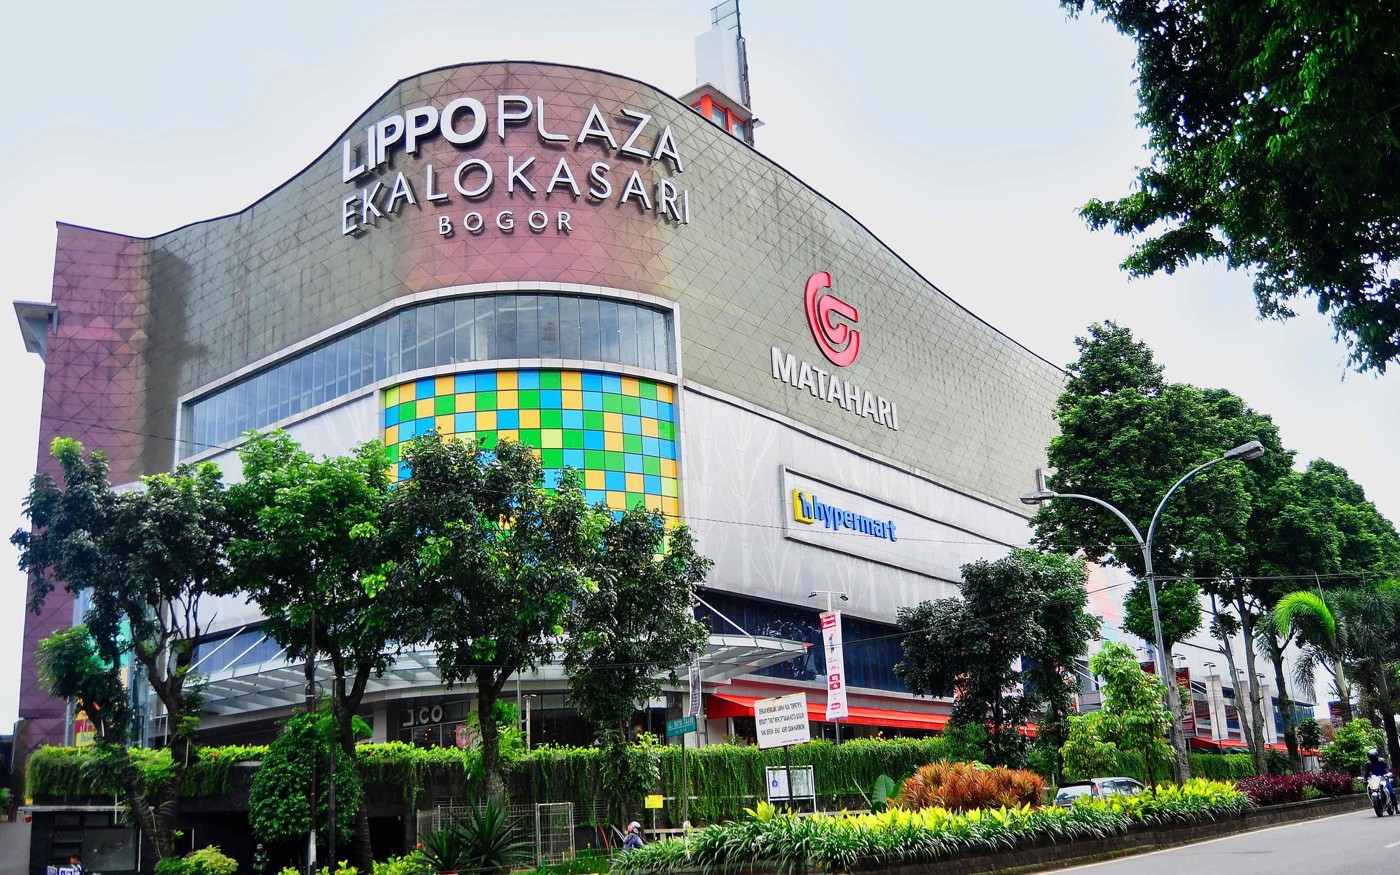 Lippo Plaza Ekalokasari